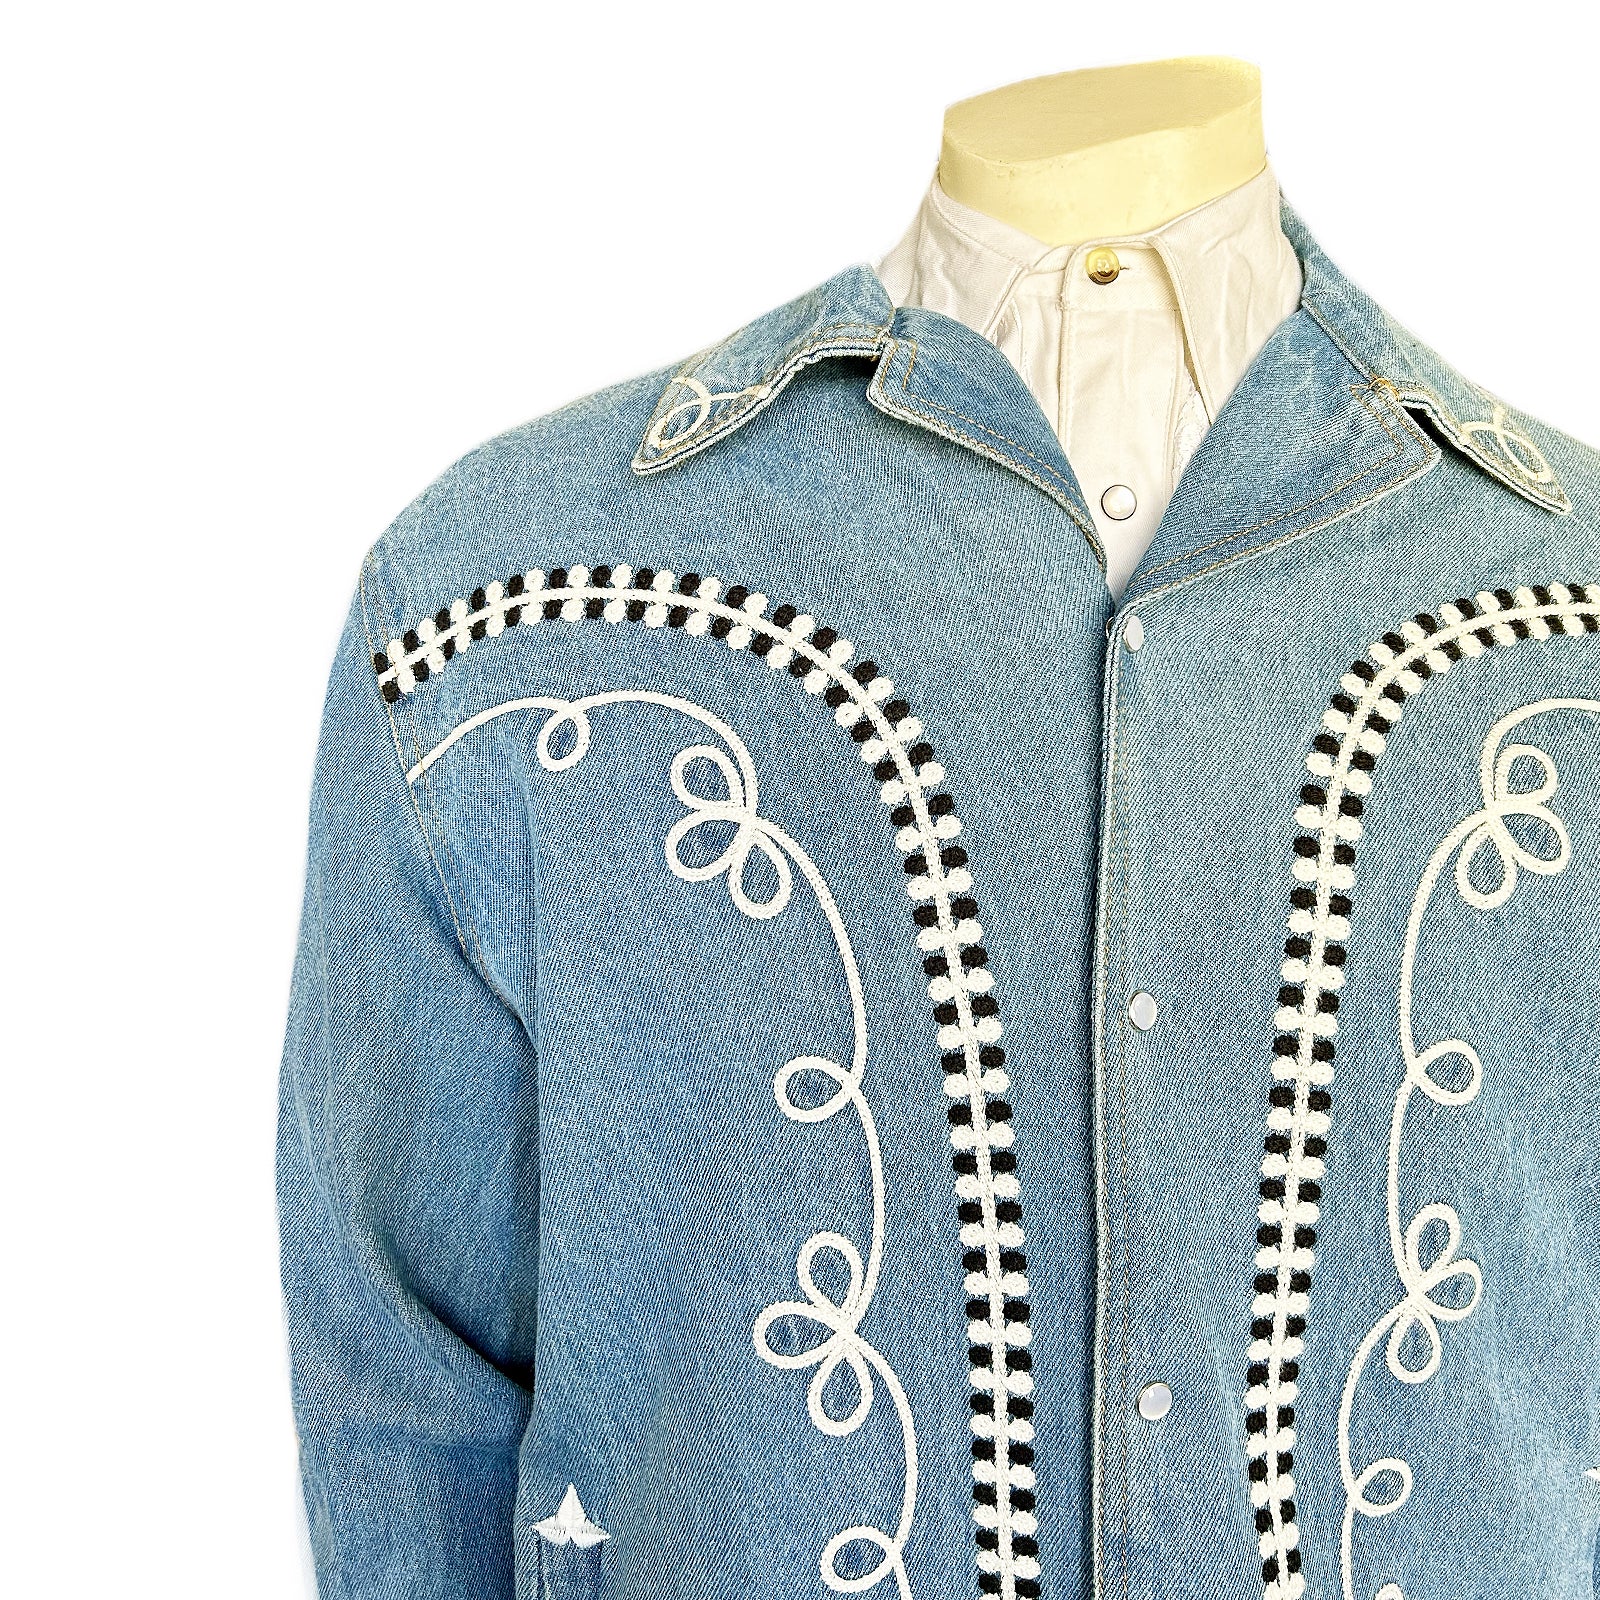 Men's Vintage Western Denim Bolero Jacket with White Rope Embroidery